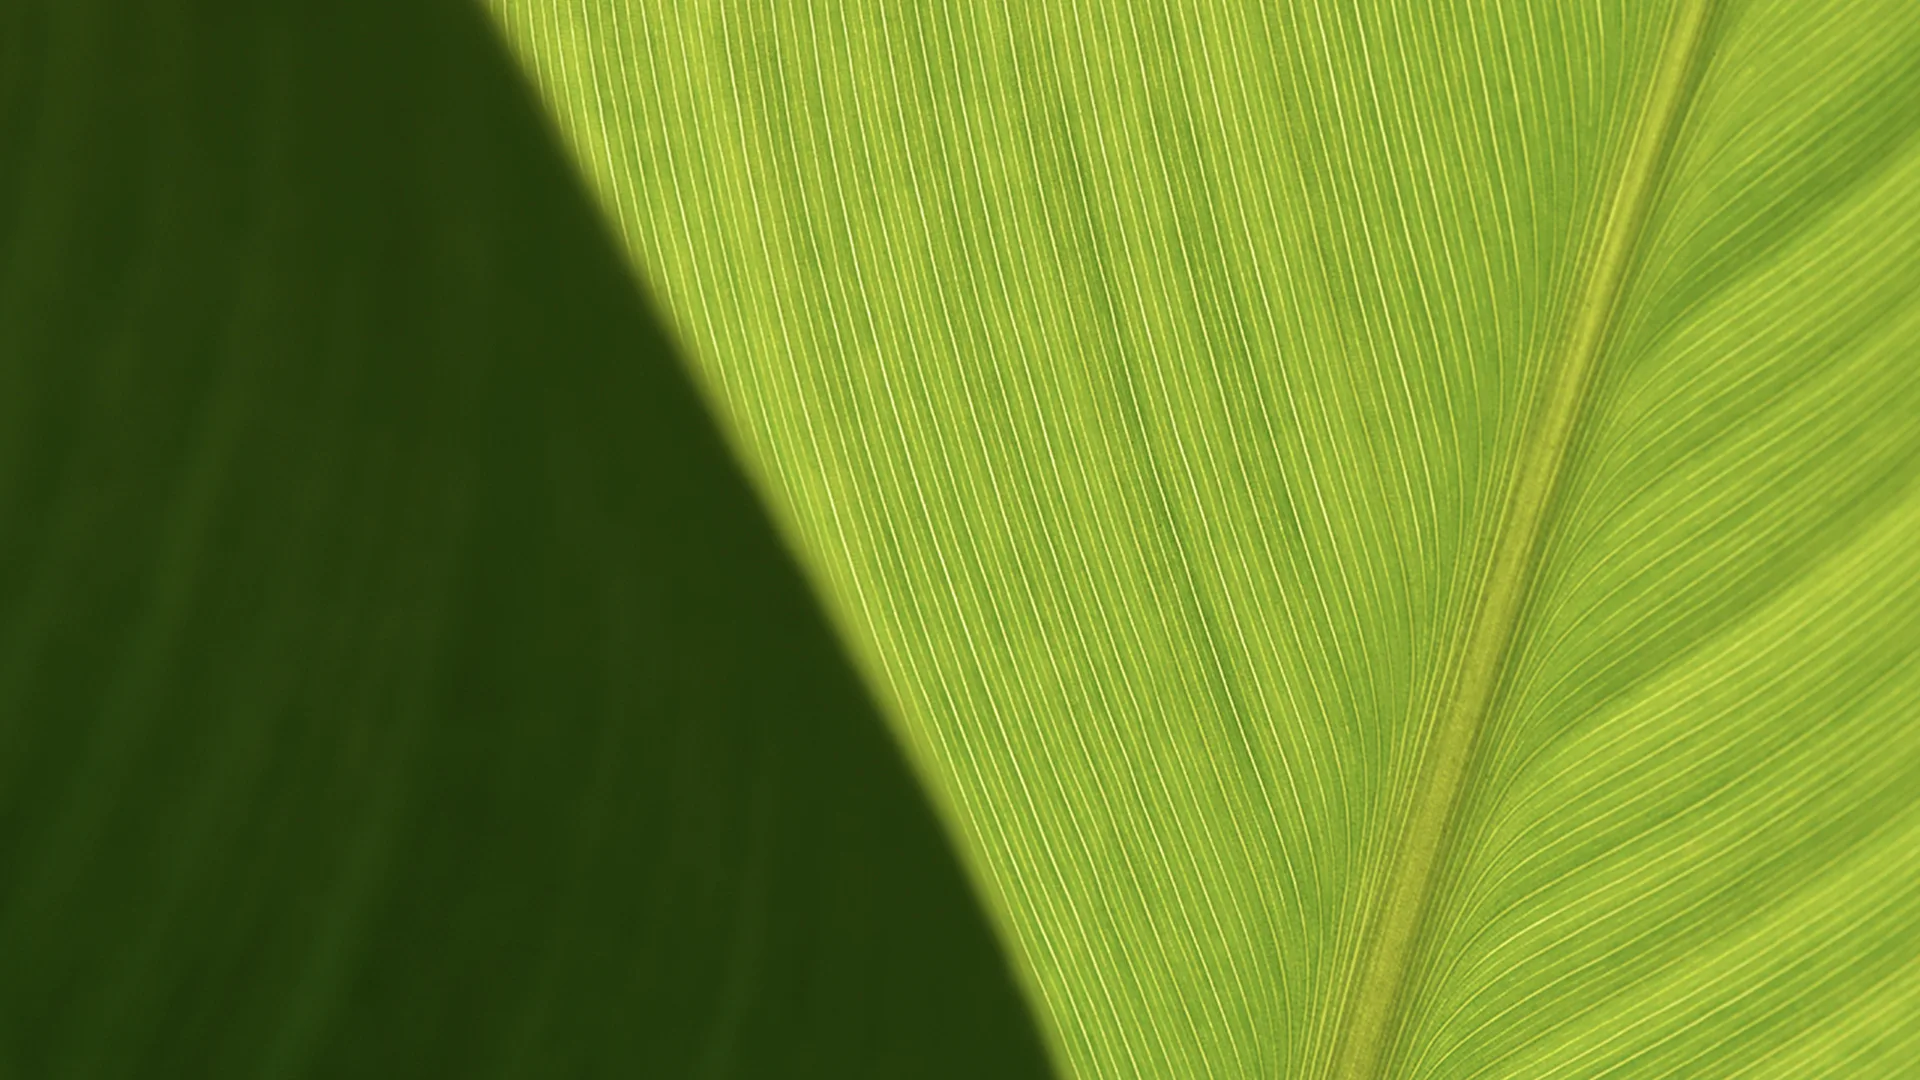 A close up of a bright green leaf.